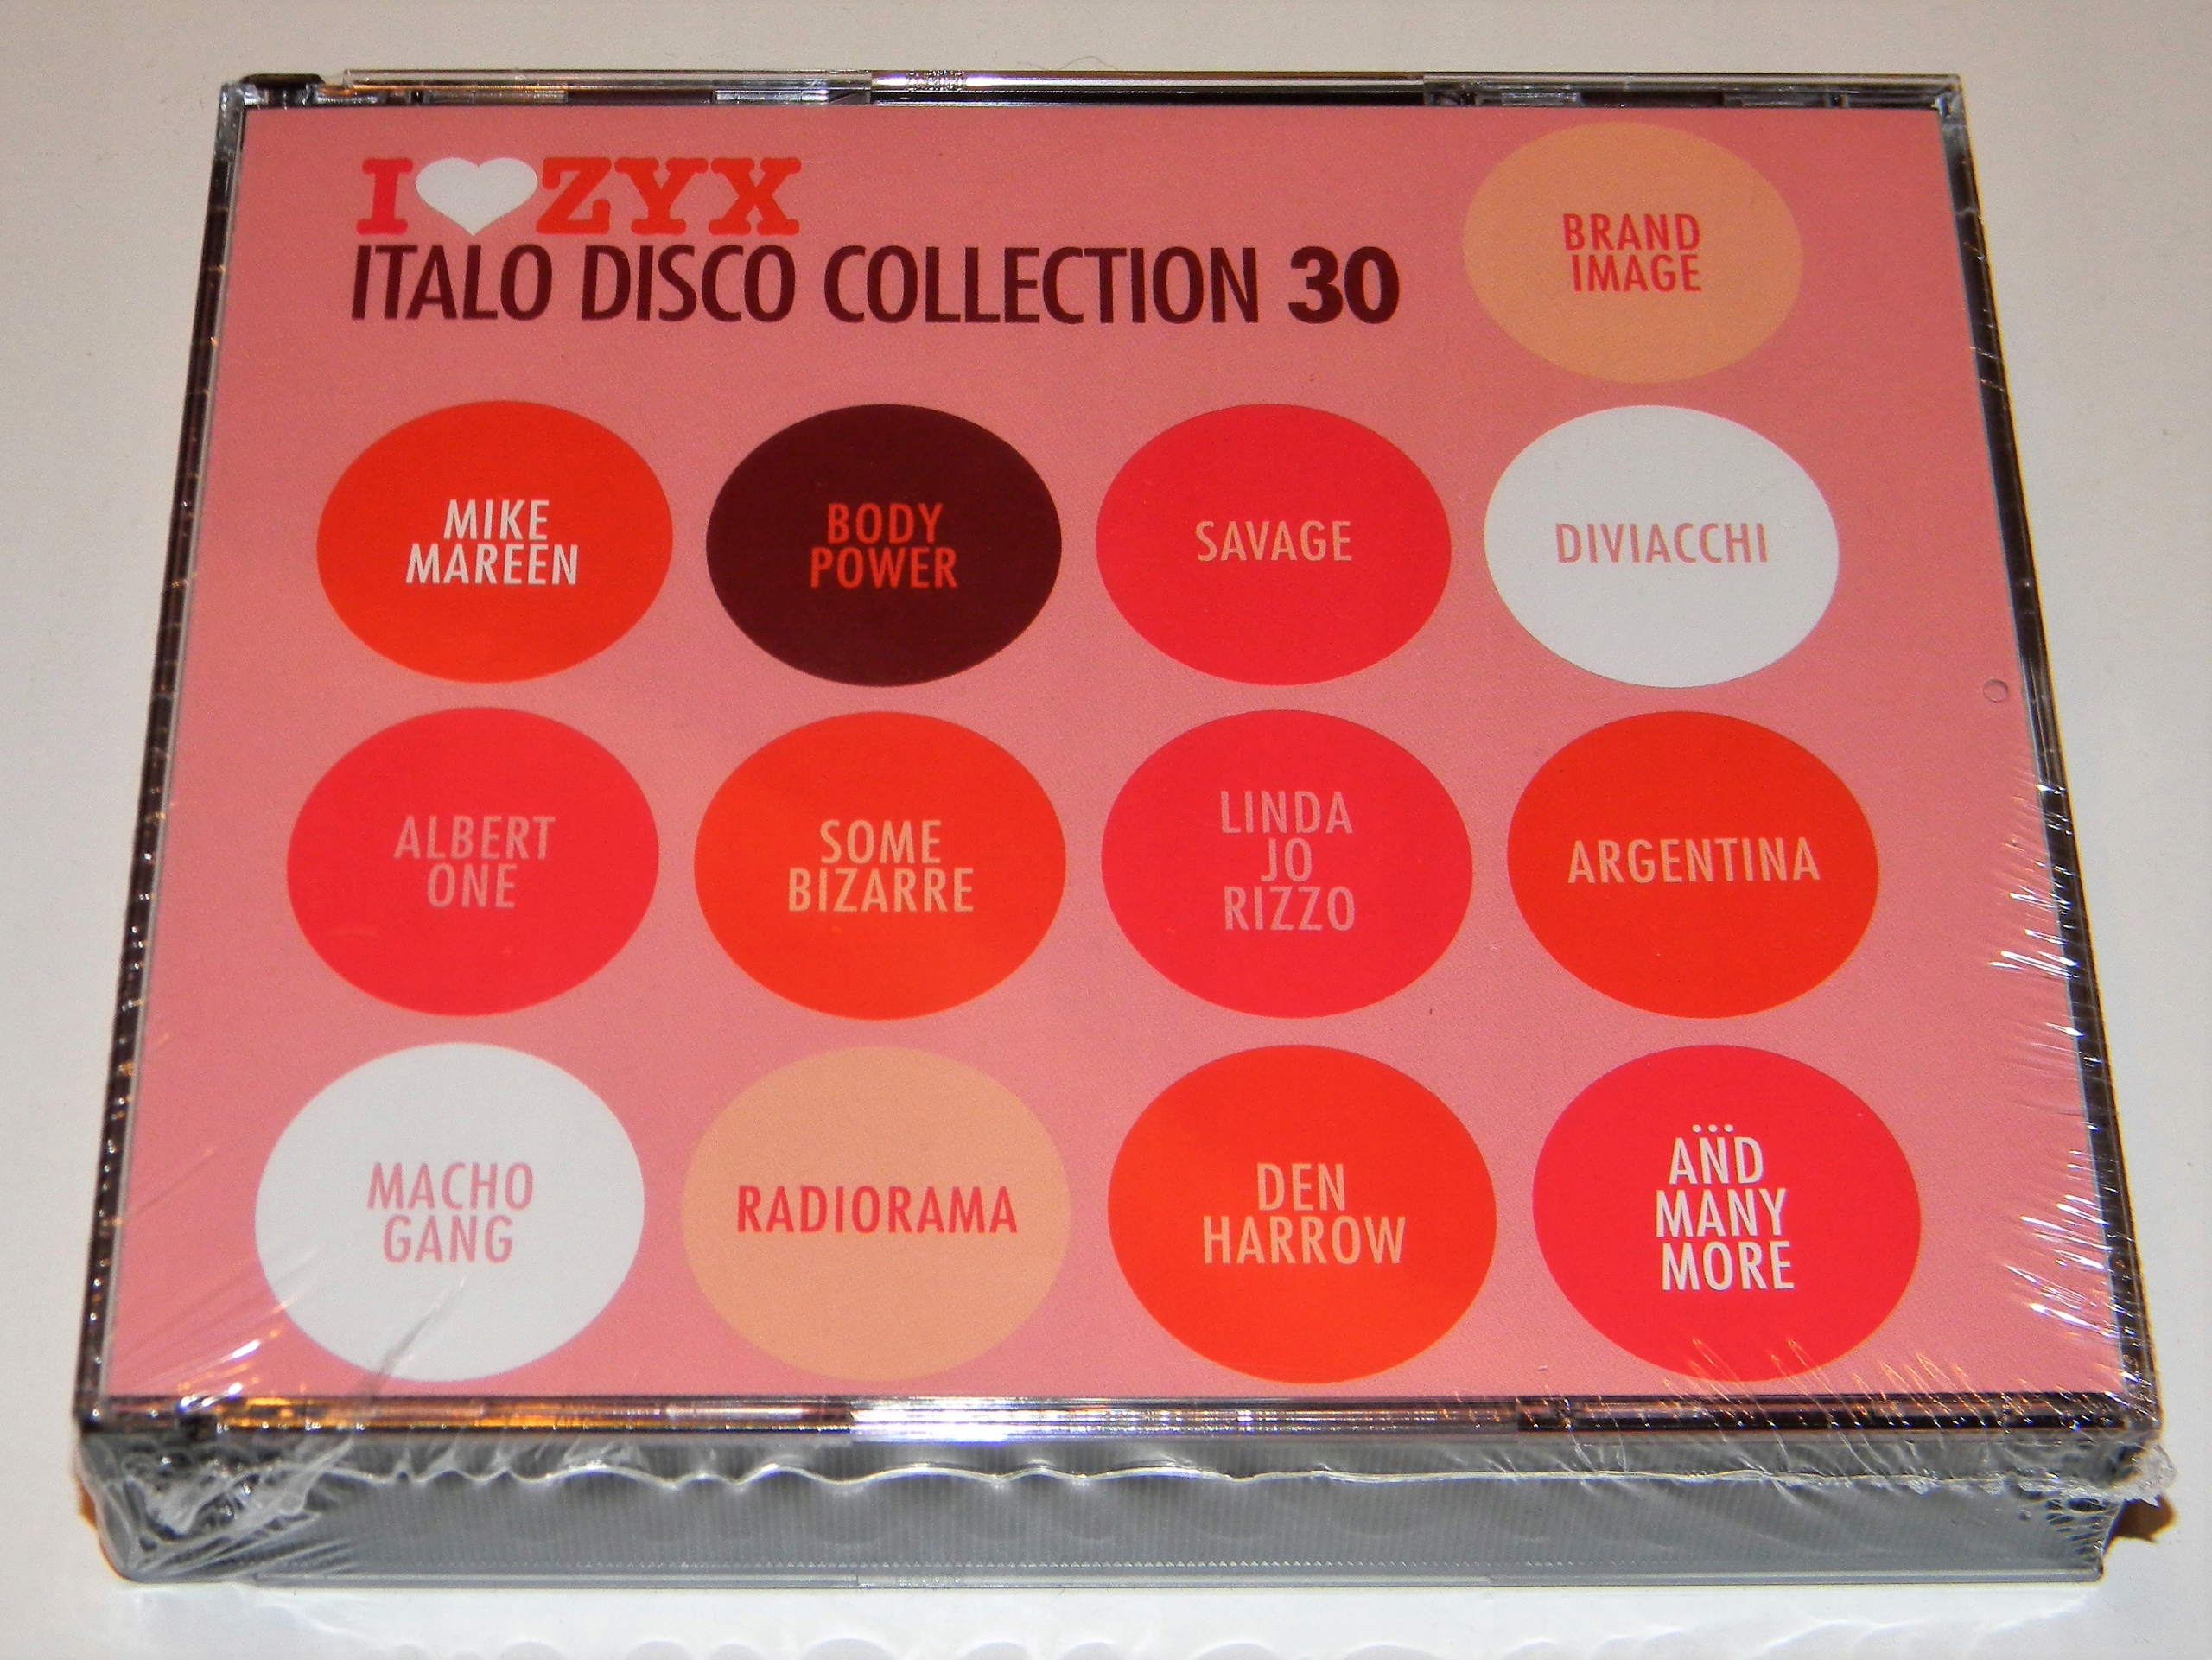 Zyx italo disco new generation vol 24. ZYX Disco collection. I Love ZYX Italo Disco. Italo Disco collection фото. I Love ZYX Italo Disco collection Vol.32.